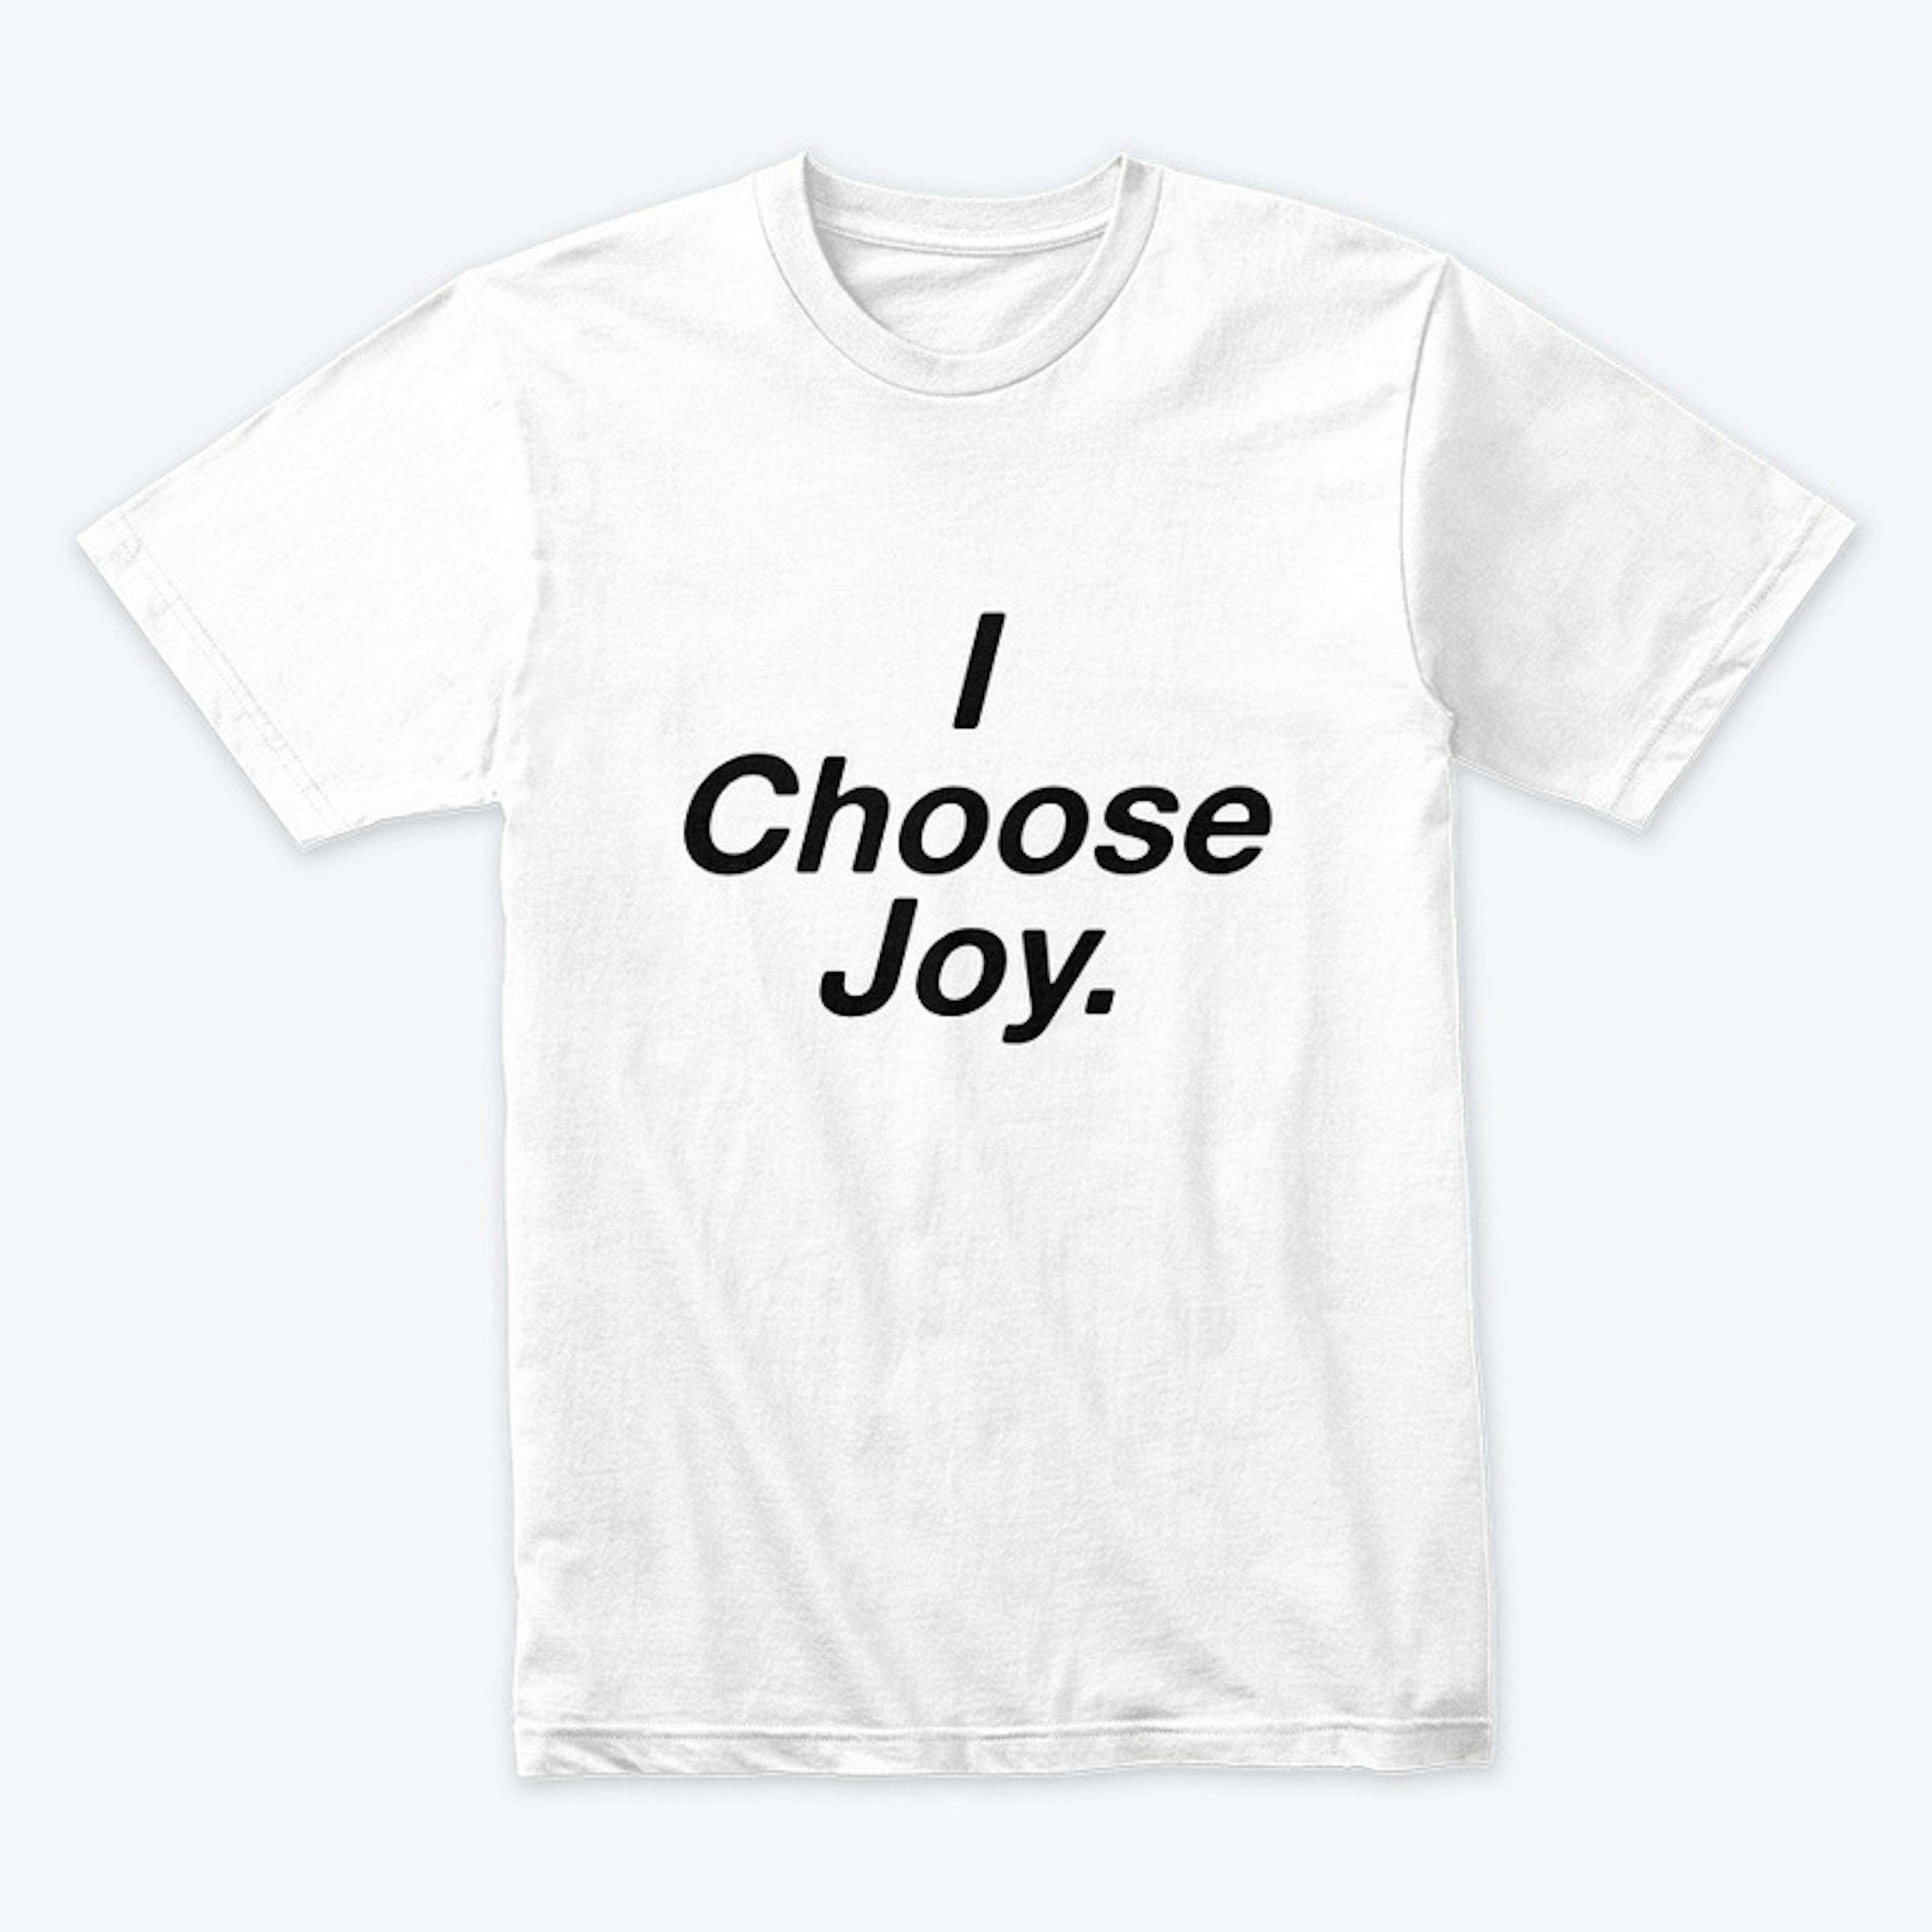 I Choose Joy